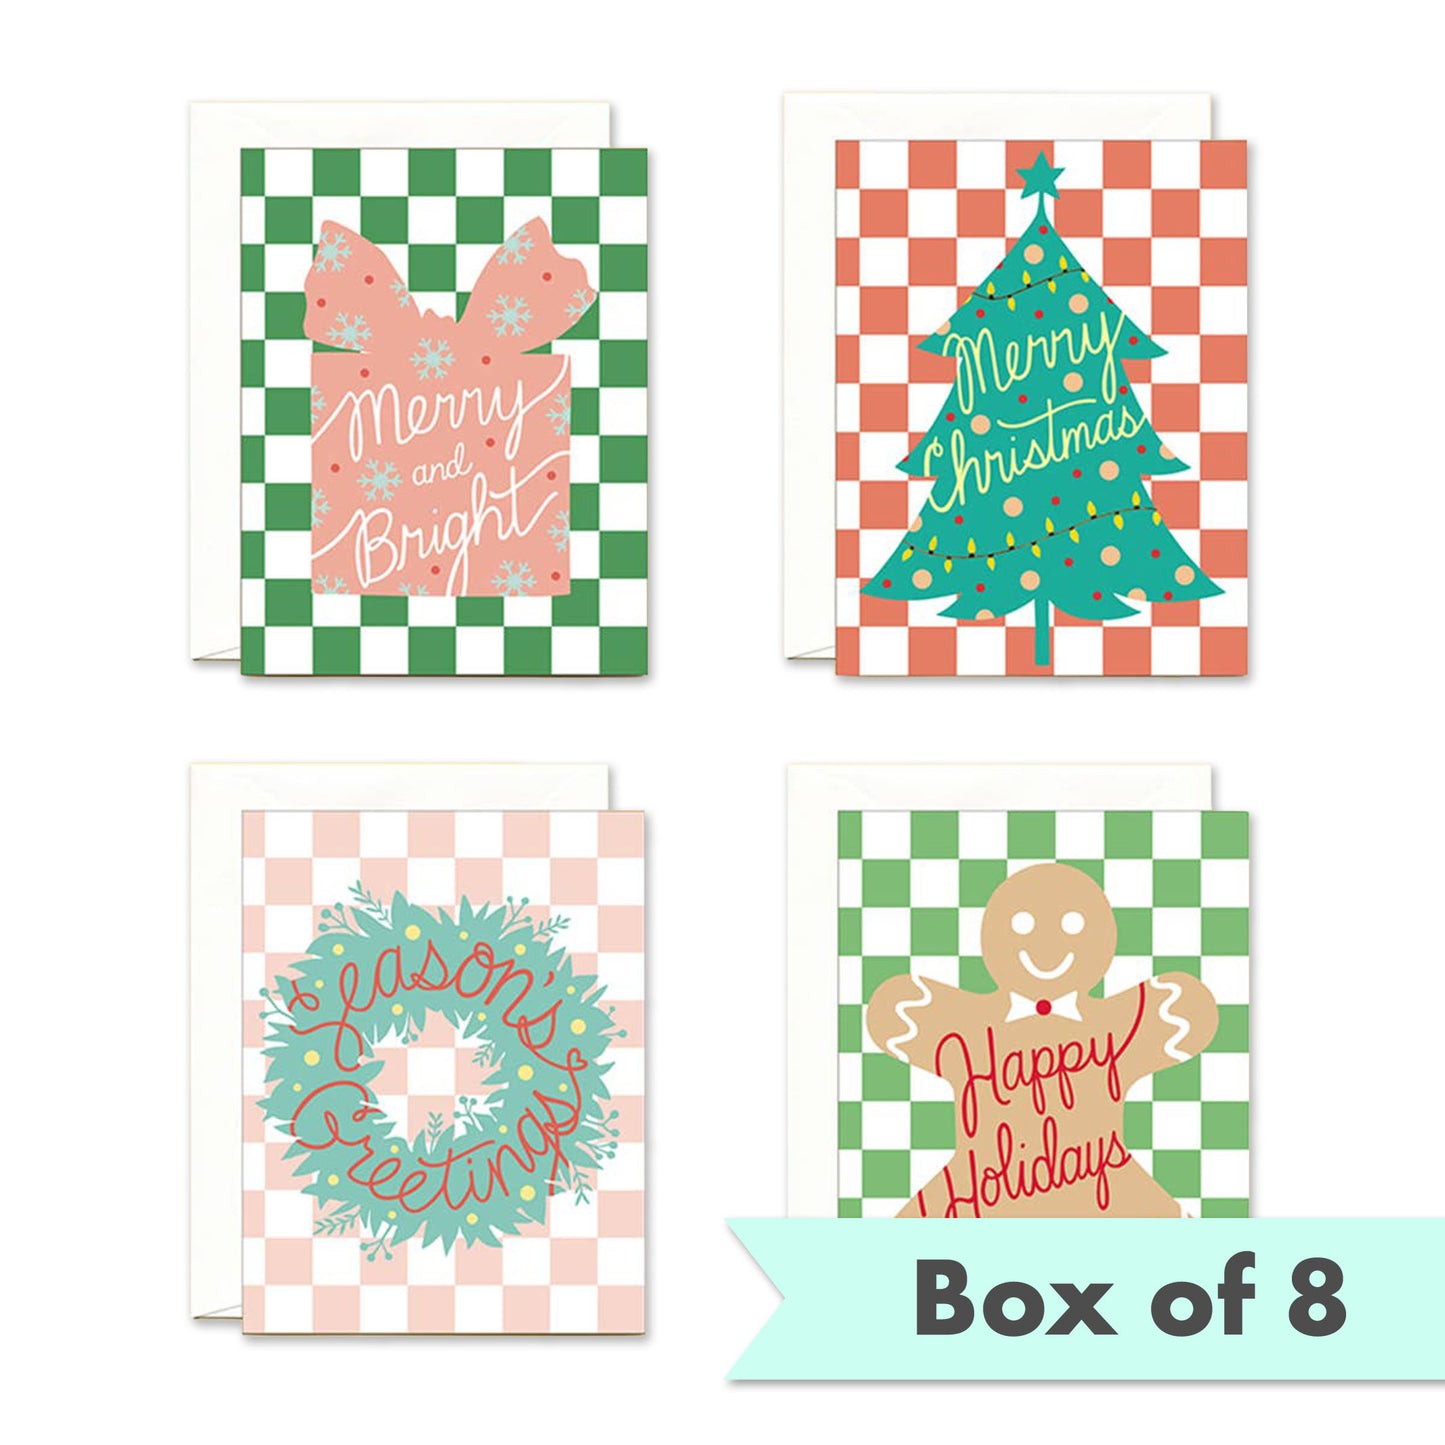 Checkered Holiday Cards - Variety Boxed Set of 8